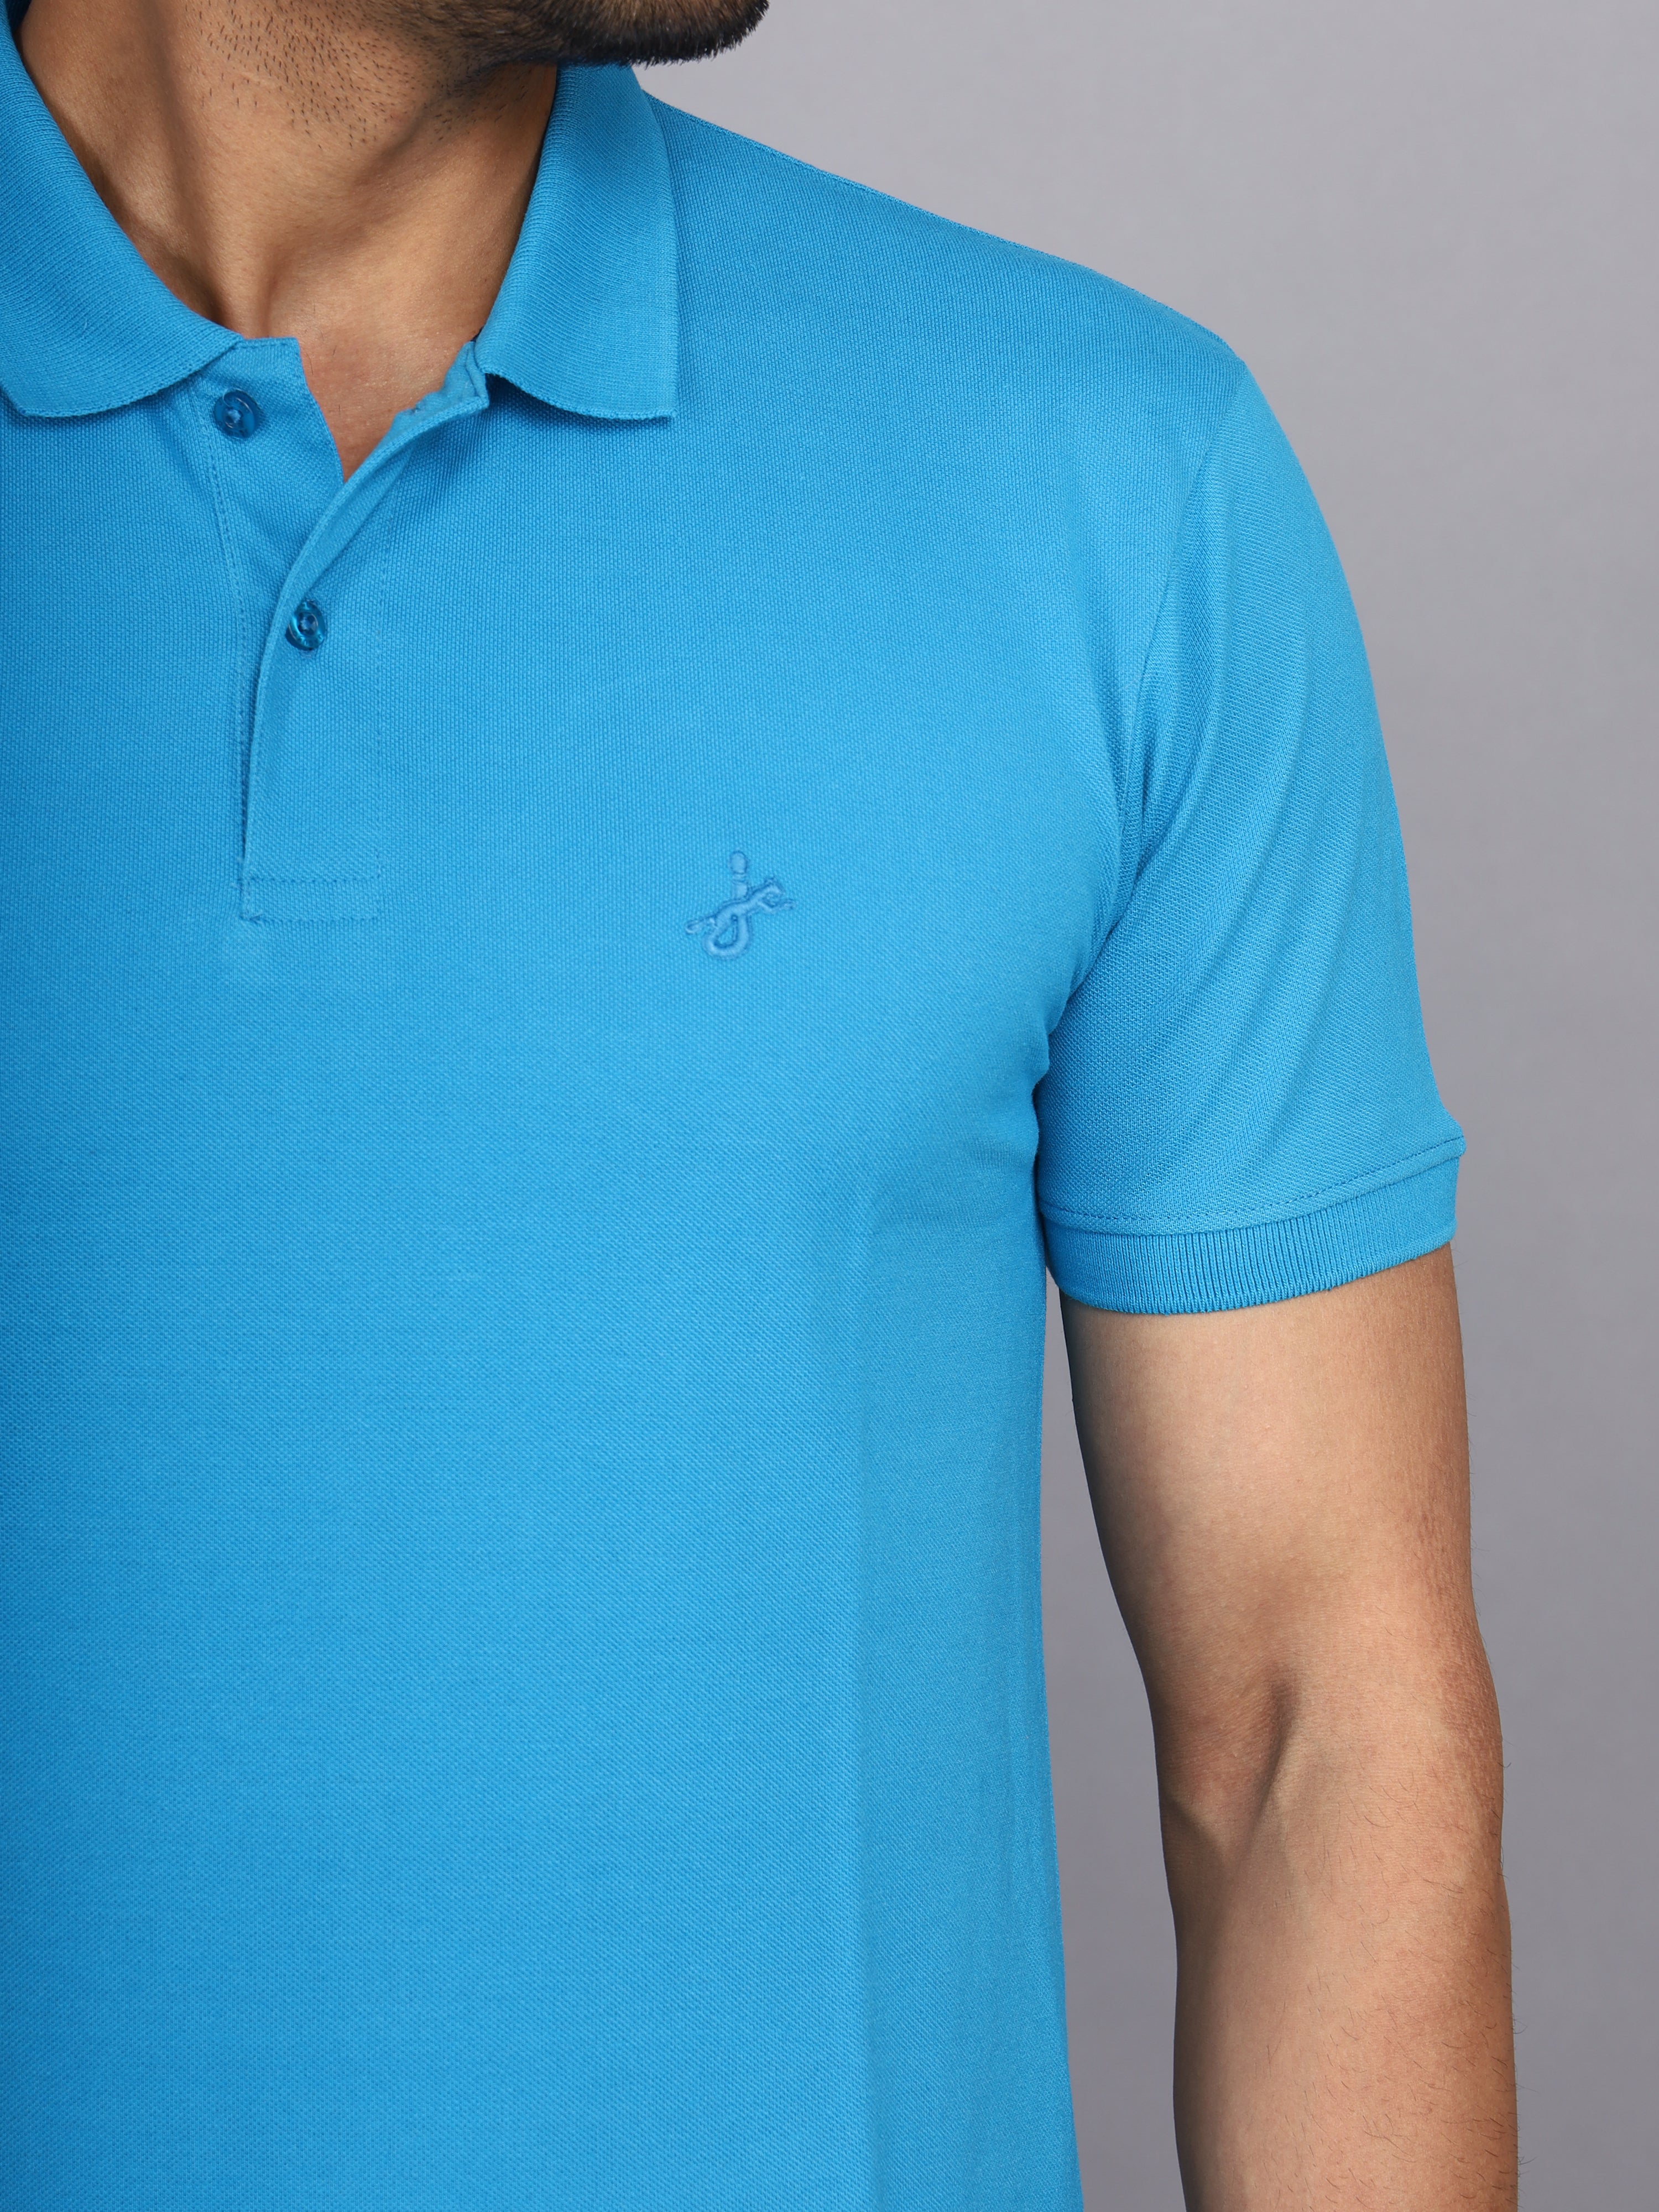 Jaguro Men's Polo T-shirt Turquoise